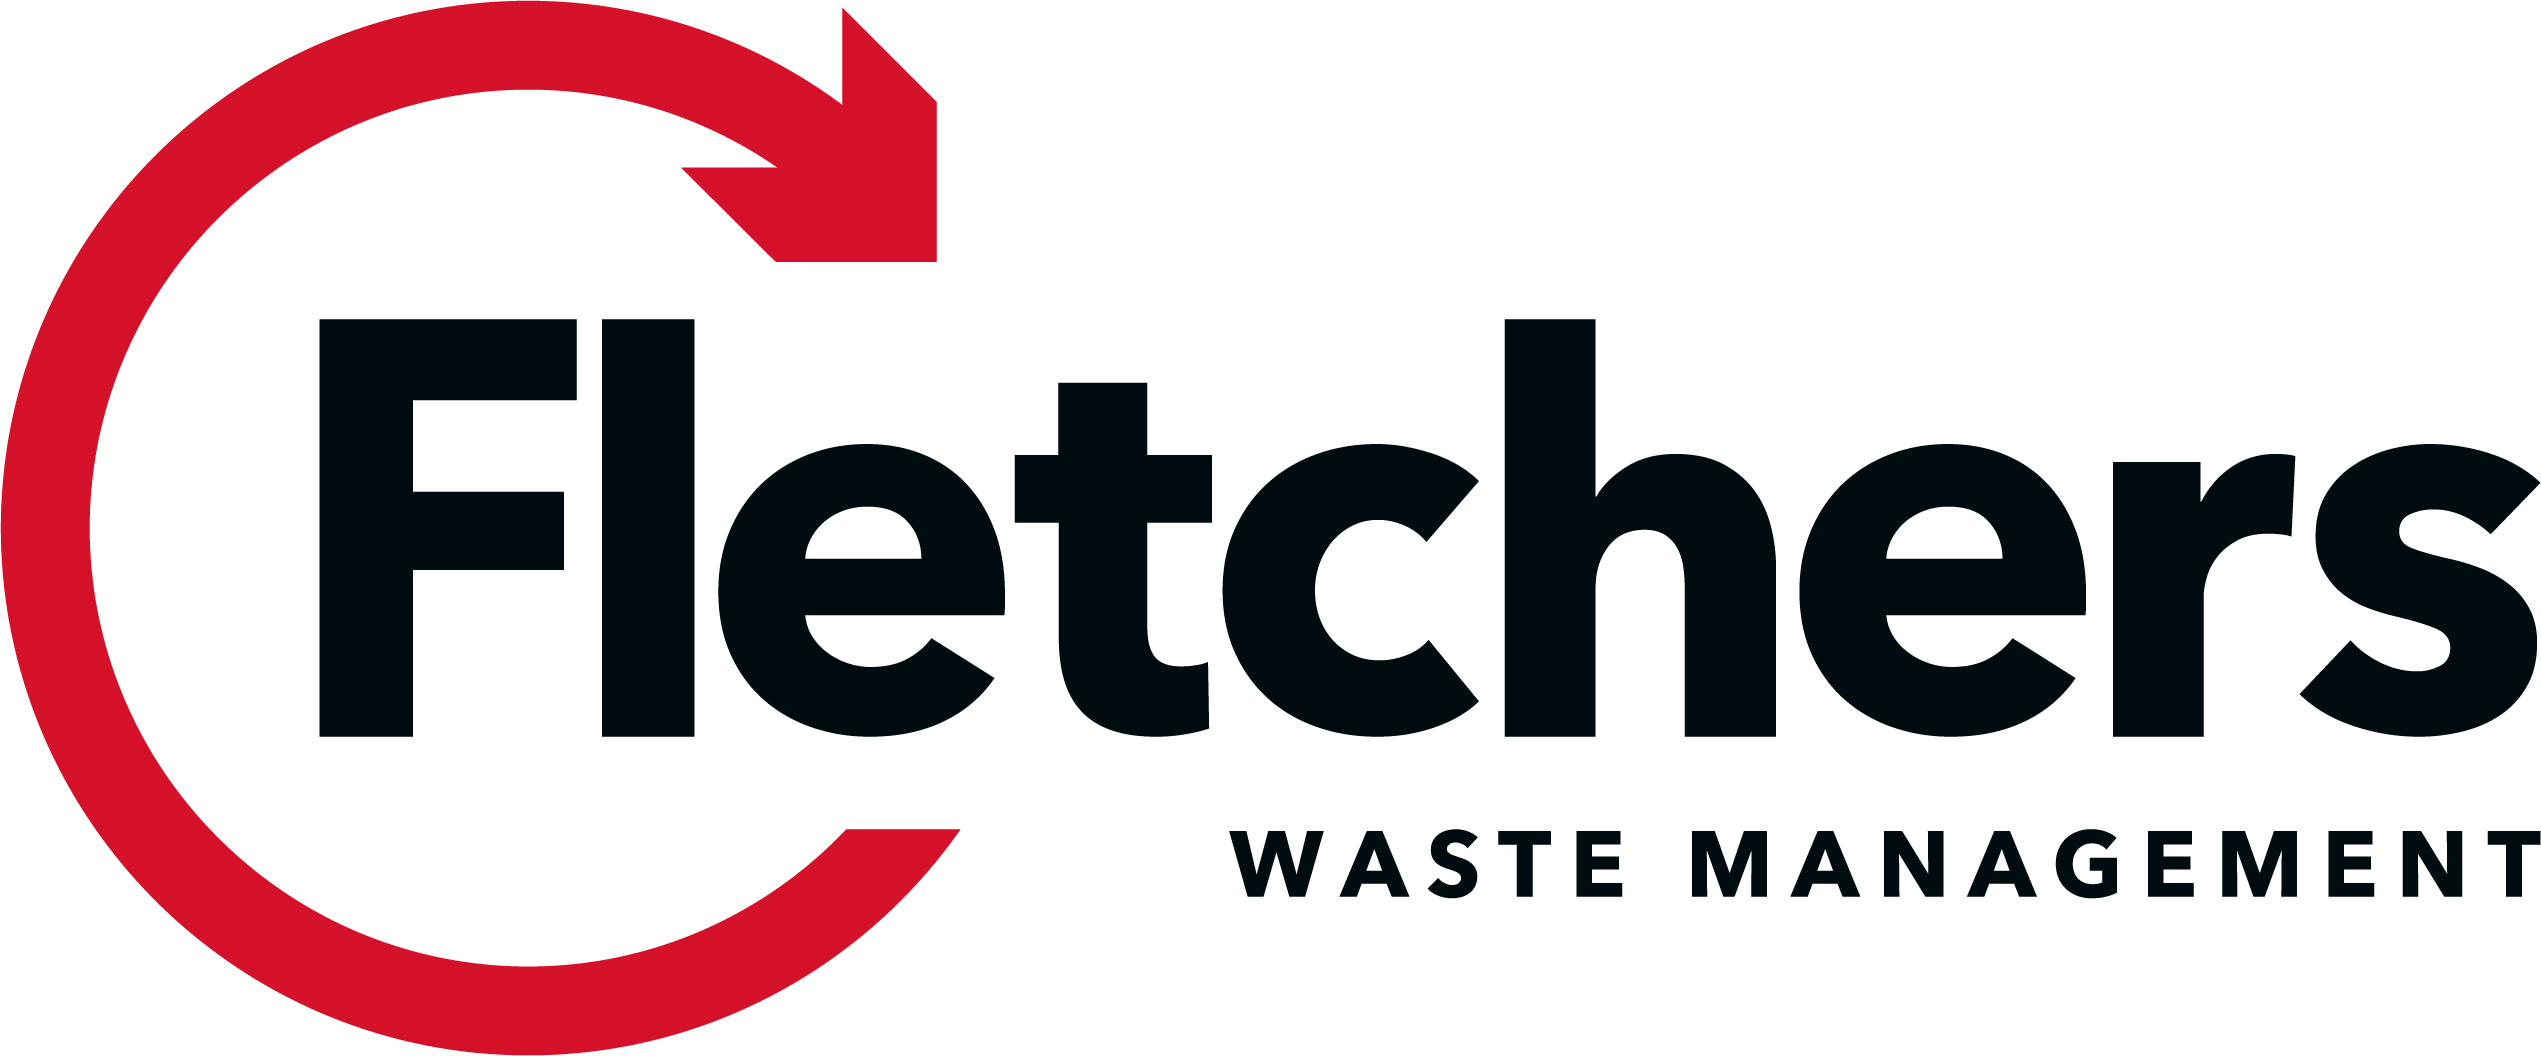 fletchers-logo-rgb-light-background